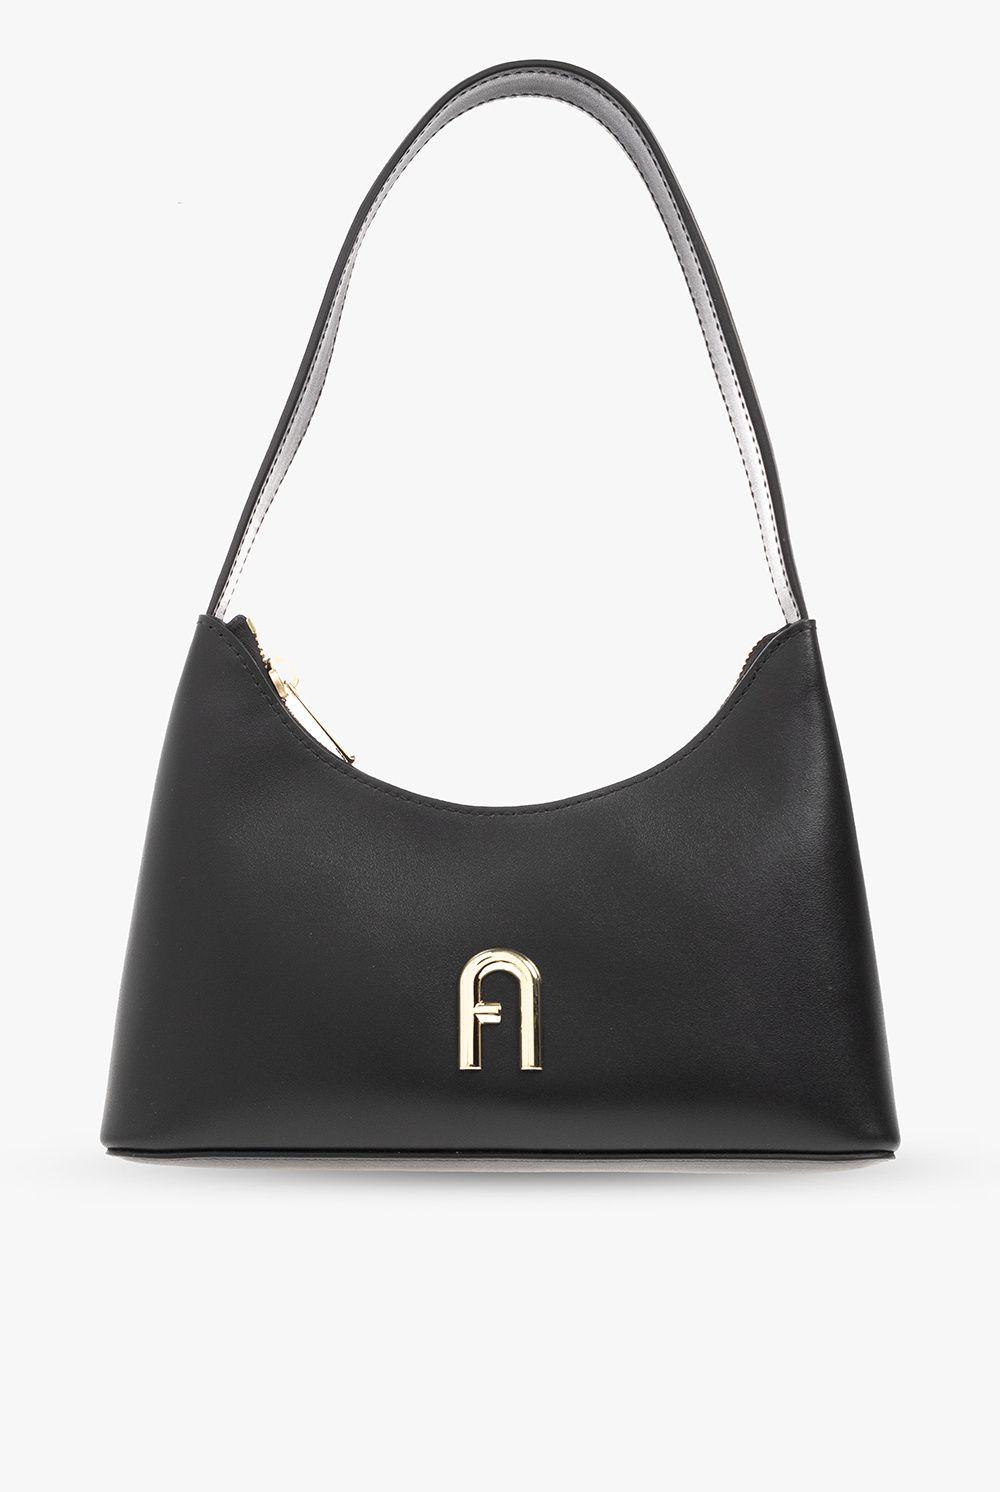 Furla 'diamante Mini' Hobo Shoulder Bag in Black | Lyst